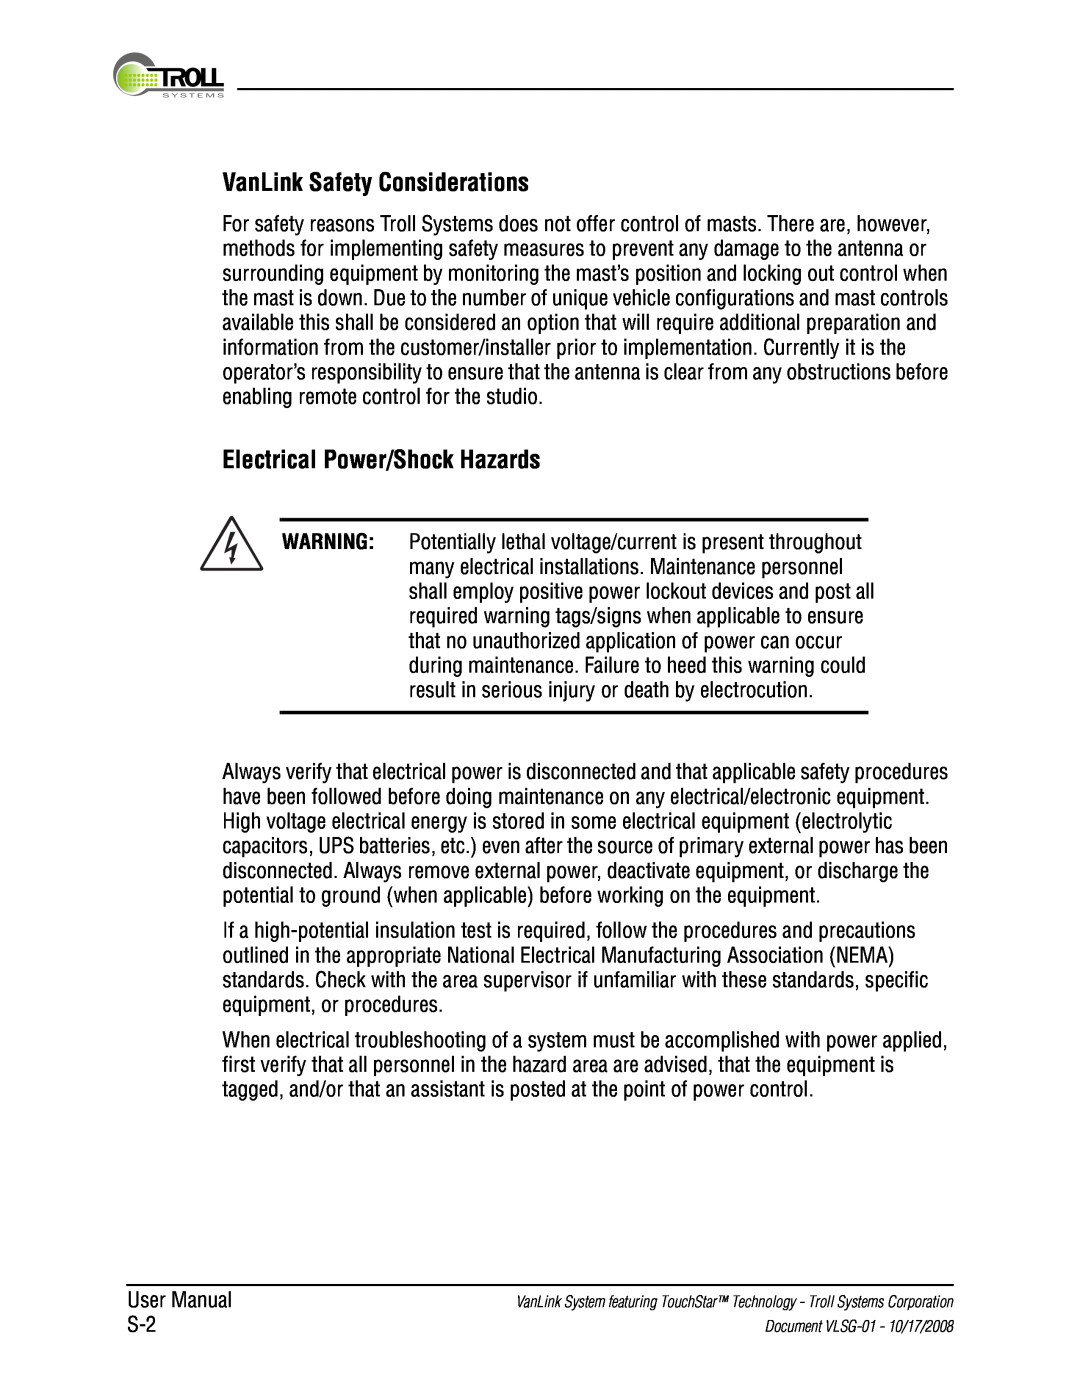 Kyocera VLSG-01 manual VanLink Safety Considerations, Electrical Power/Shock Hazards 